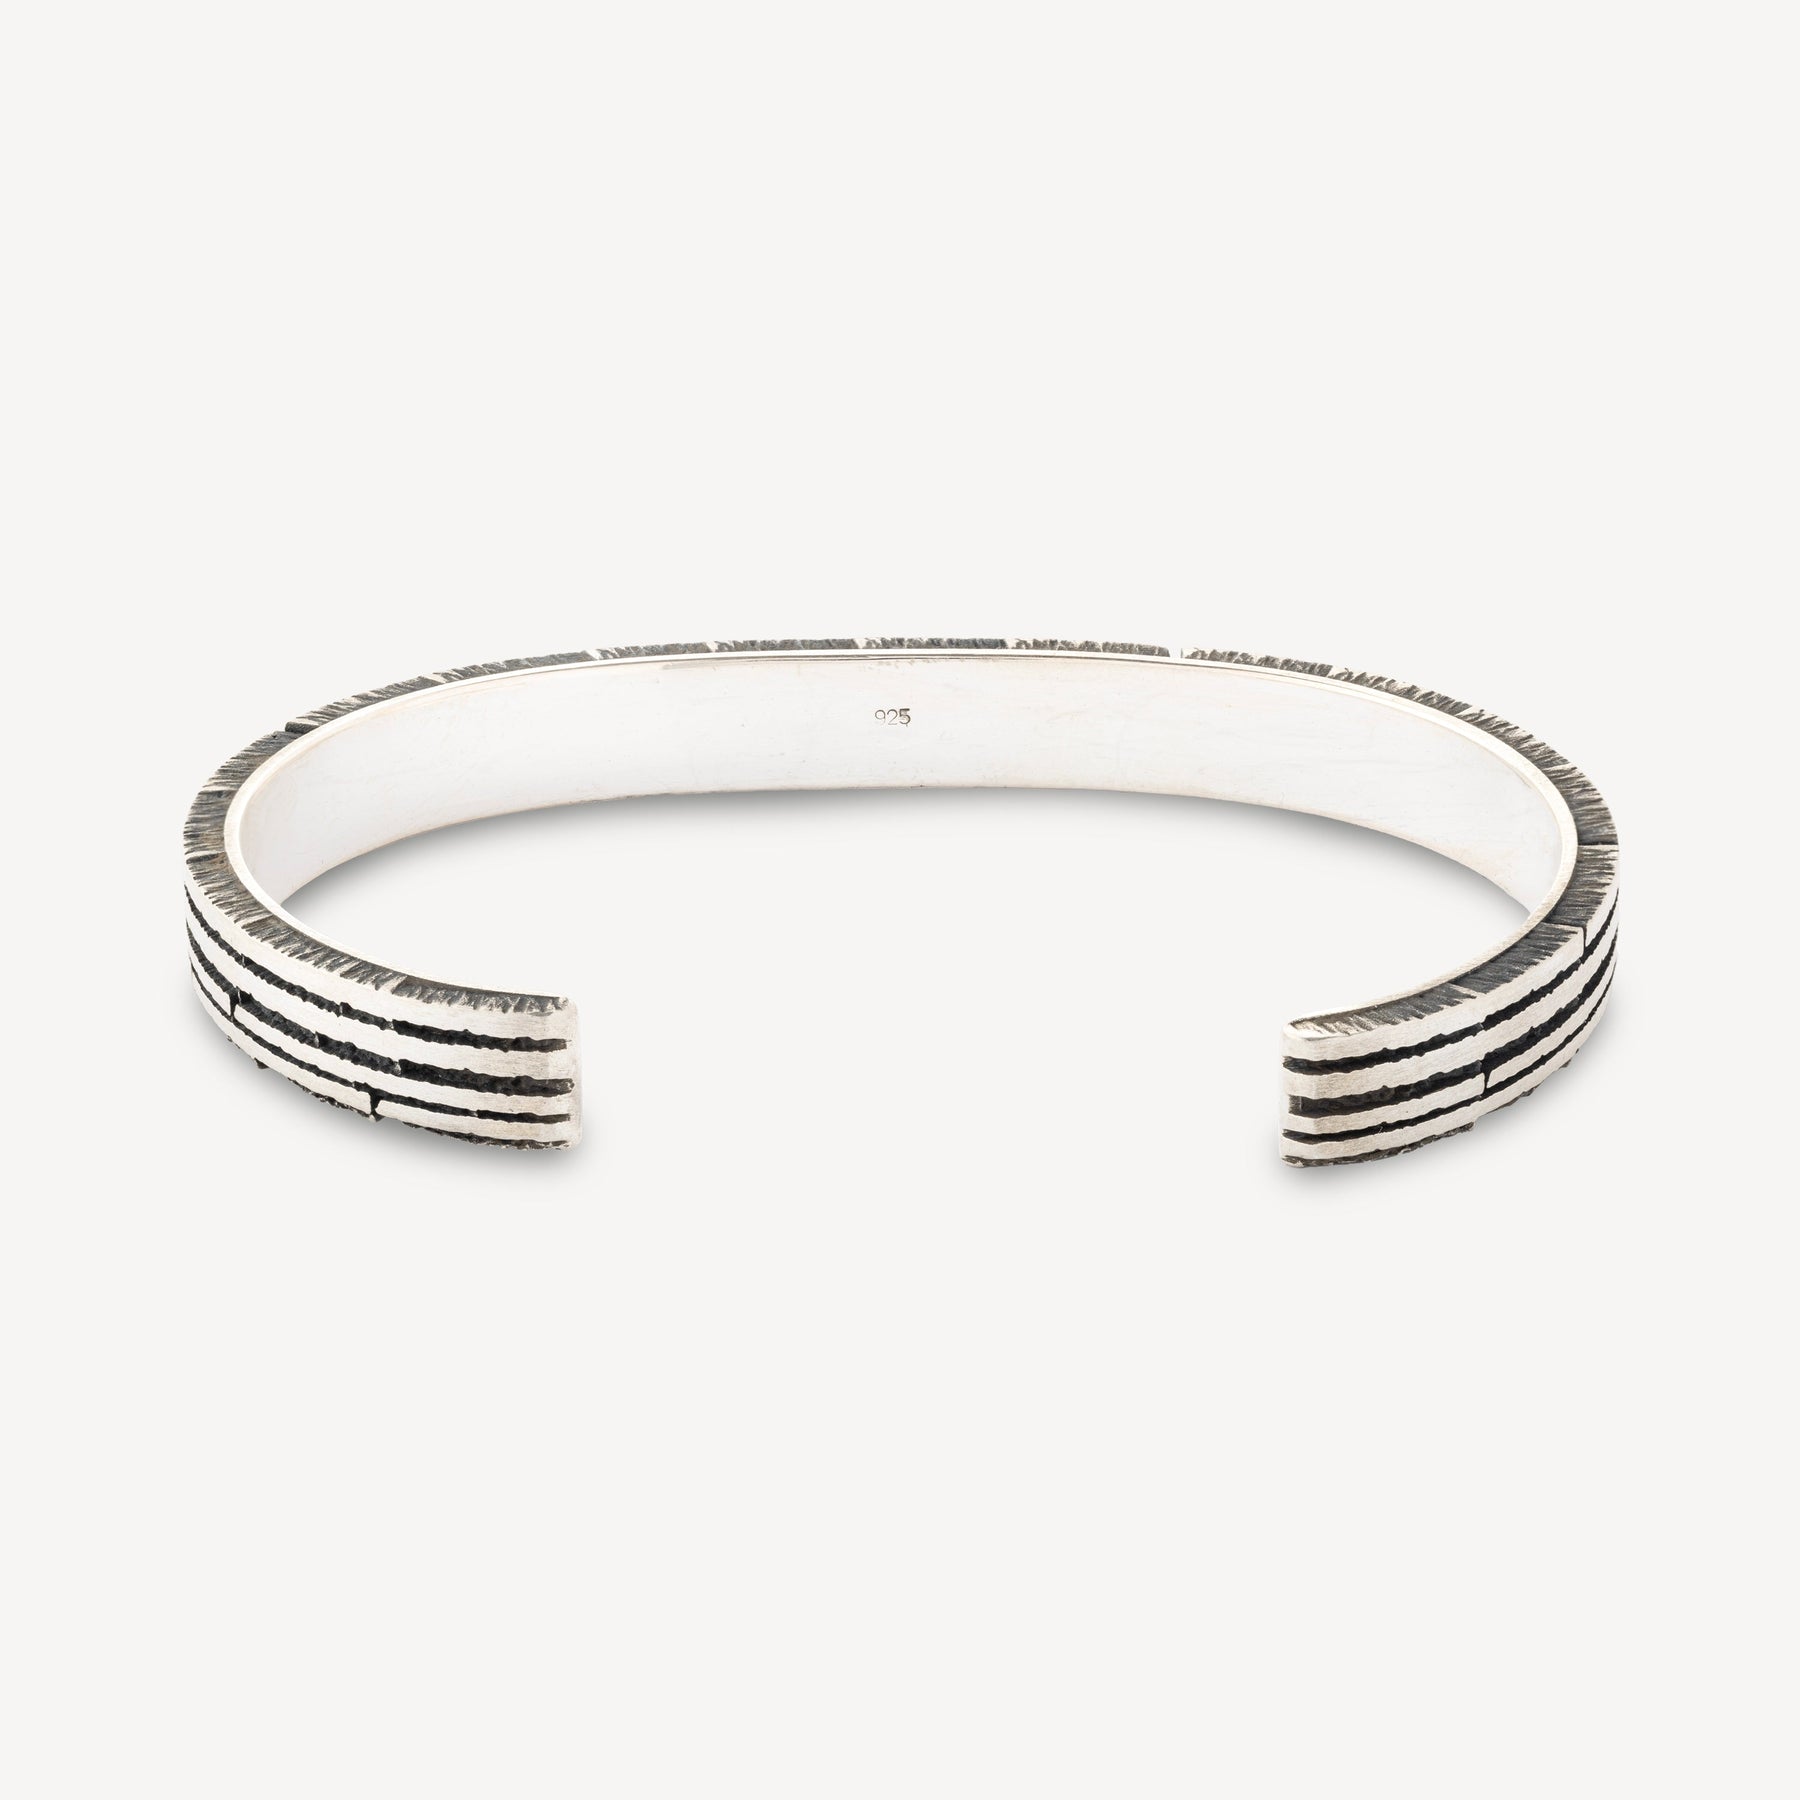 SIK-010 Medium Silver Bracelet